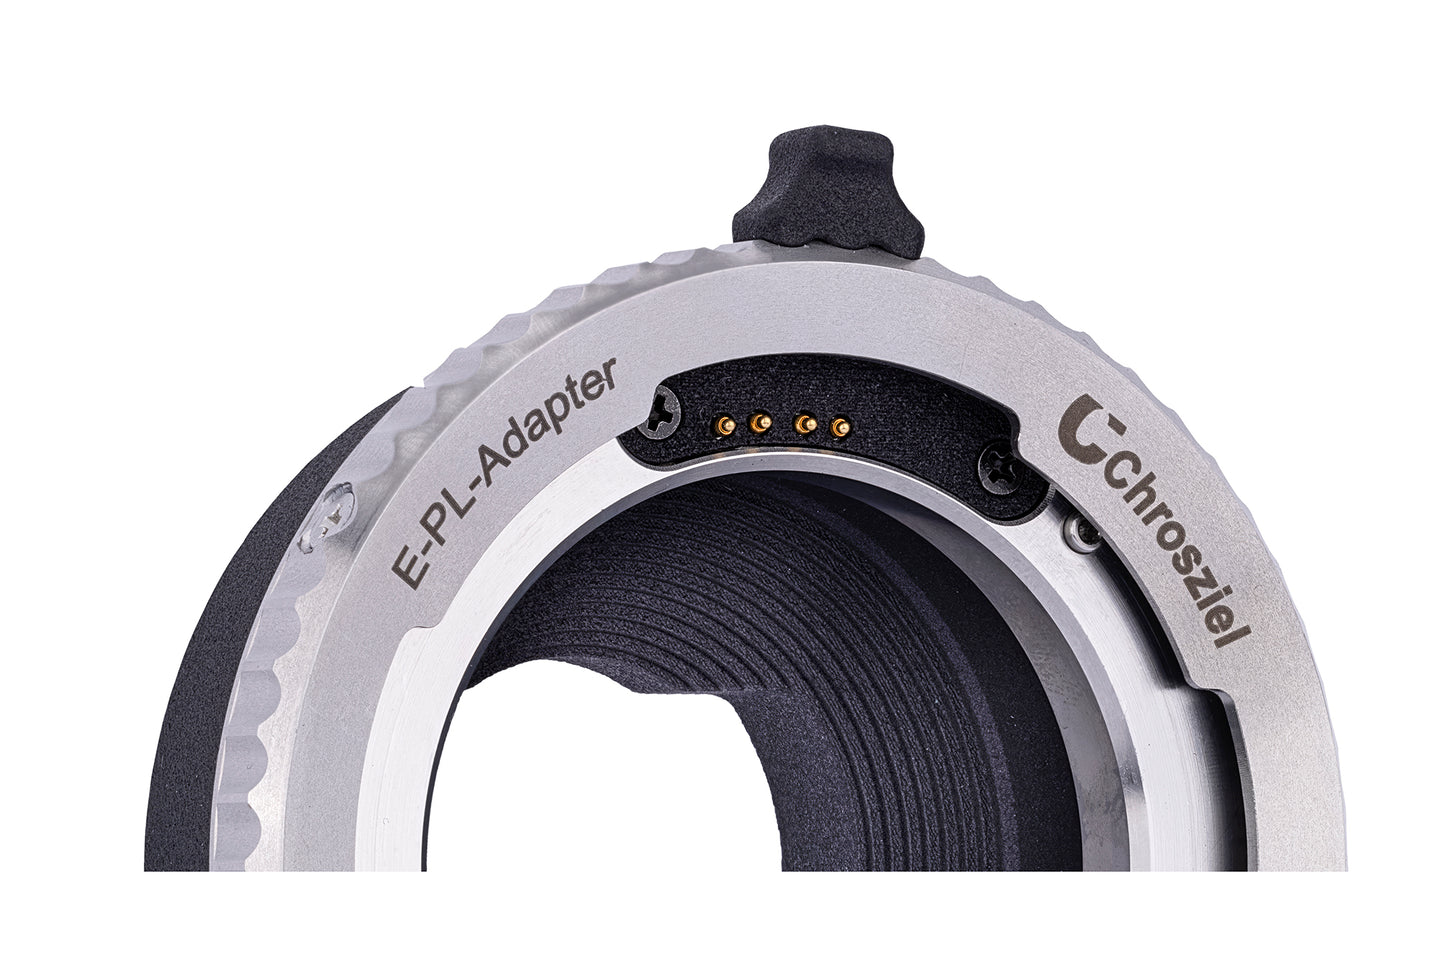 Chrosziel Meta Mount: Sony E to PL Lens Adapter with metadata communication. Enables cine lens metadata transmission. Full control of ENG lenses.